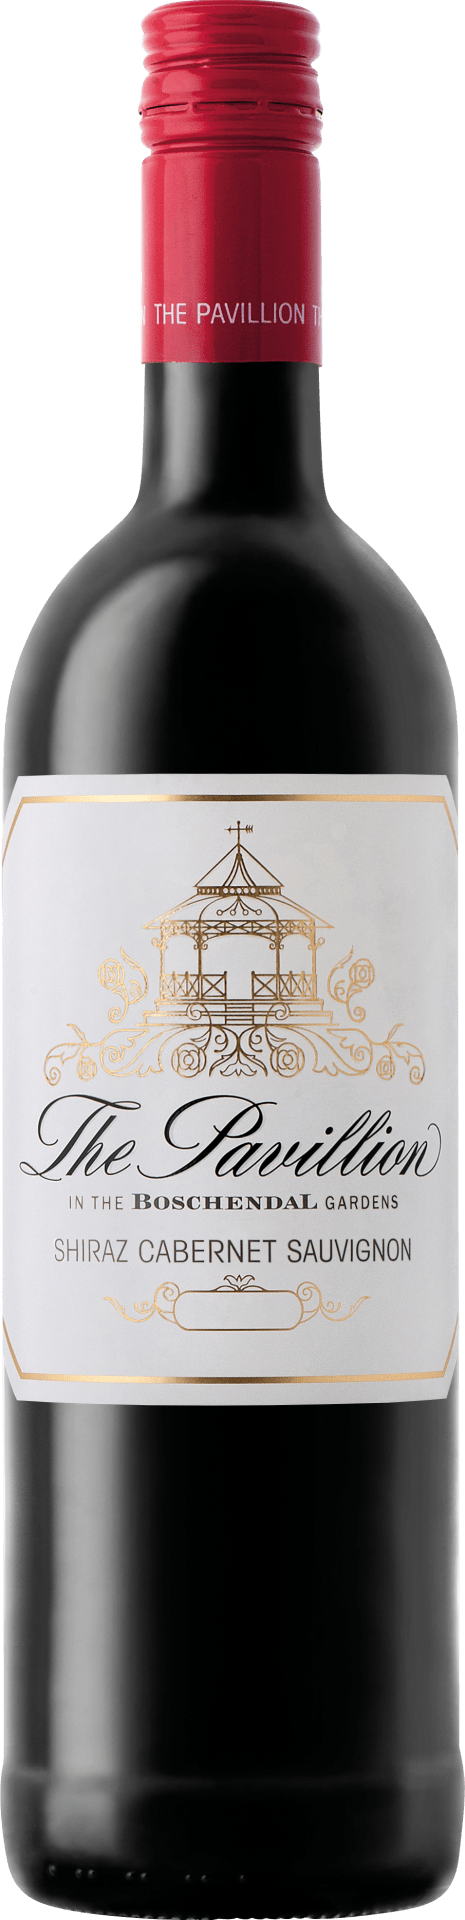 The Pavillion Shiraz - Cabernet Sauvignon